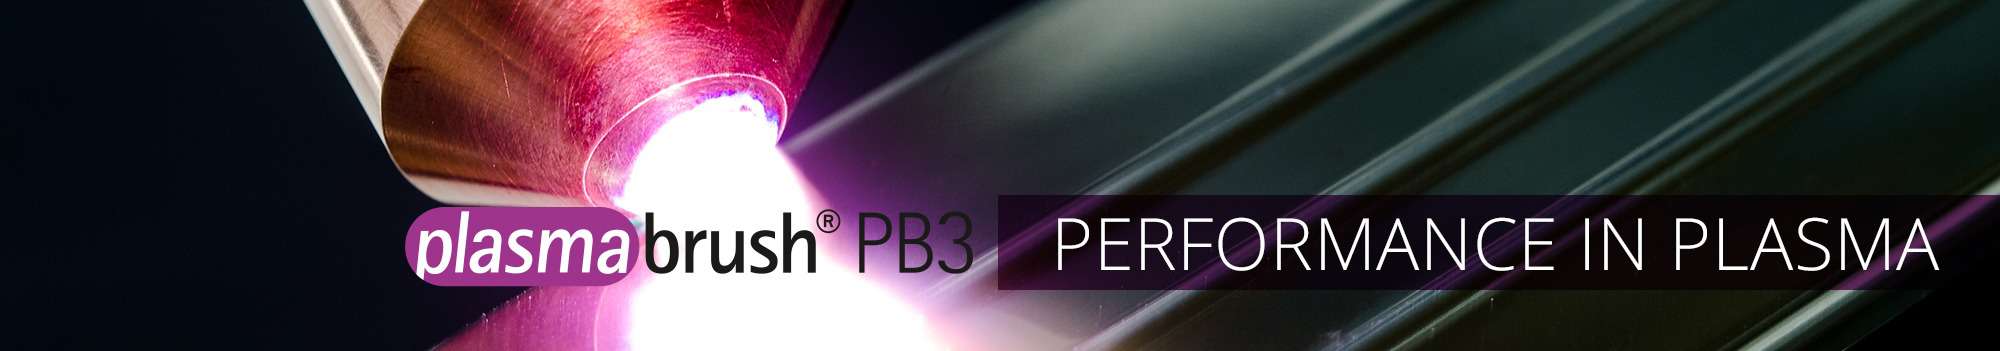 Plasmabrush PB3 High Power Plasma Systems